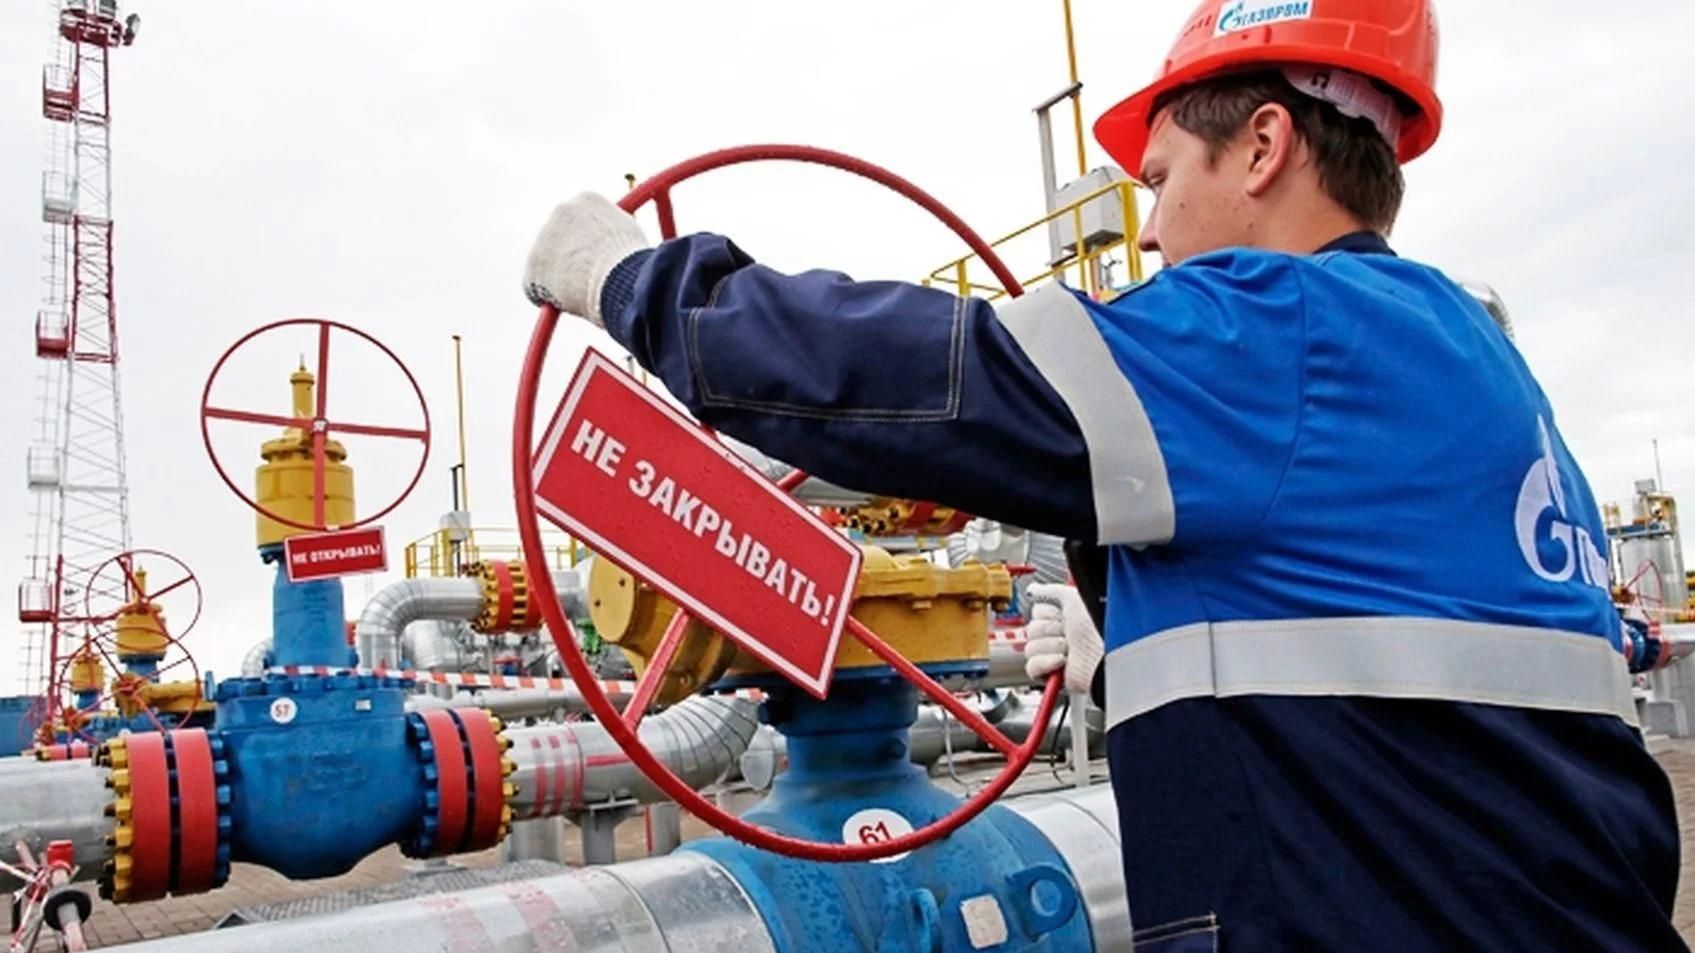 При каких условиях "Газпром" не подпишет контракт на транзит газа через Украину